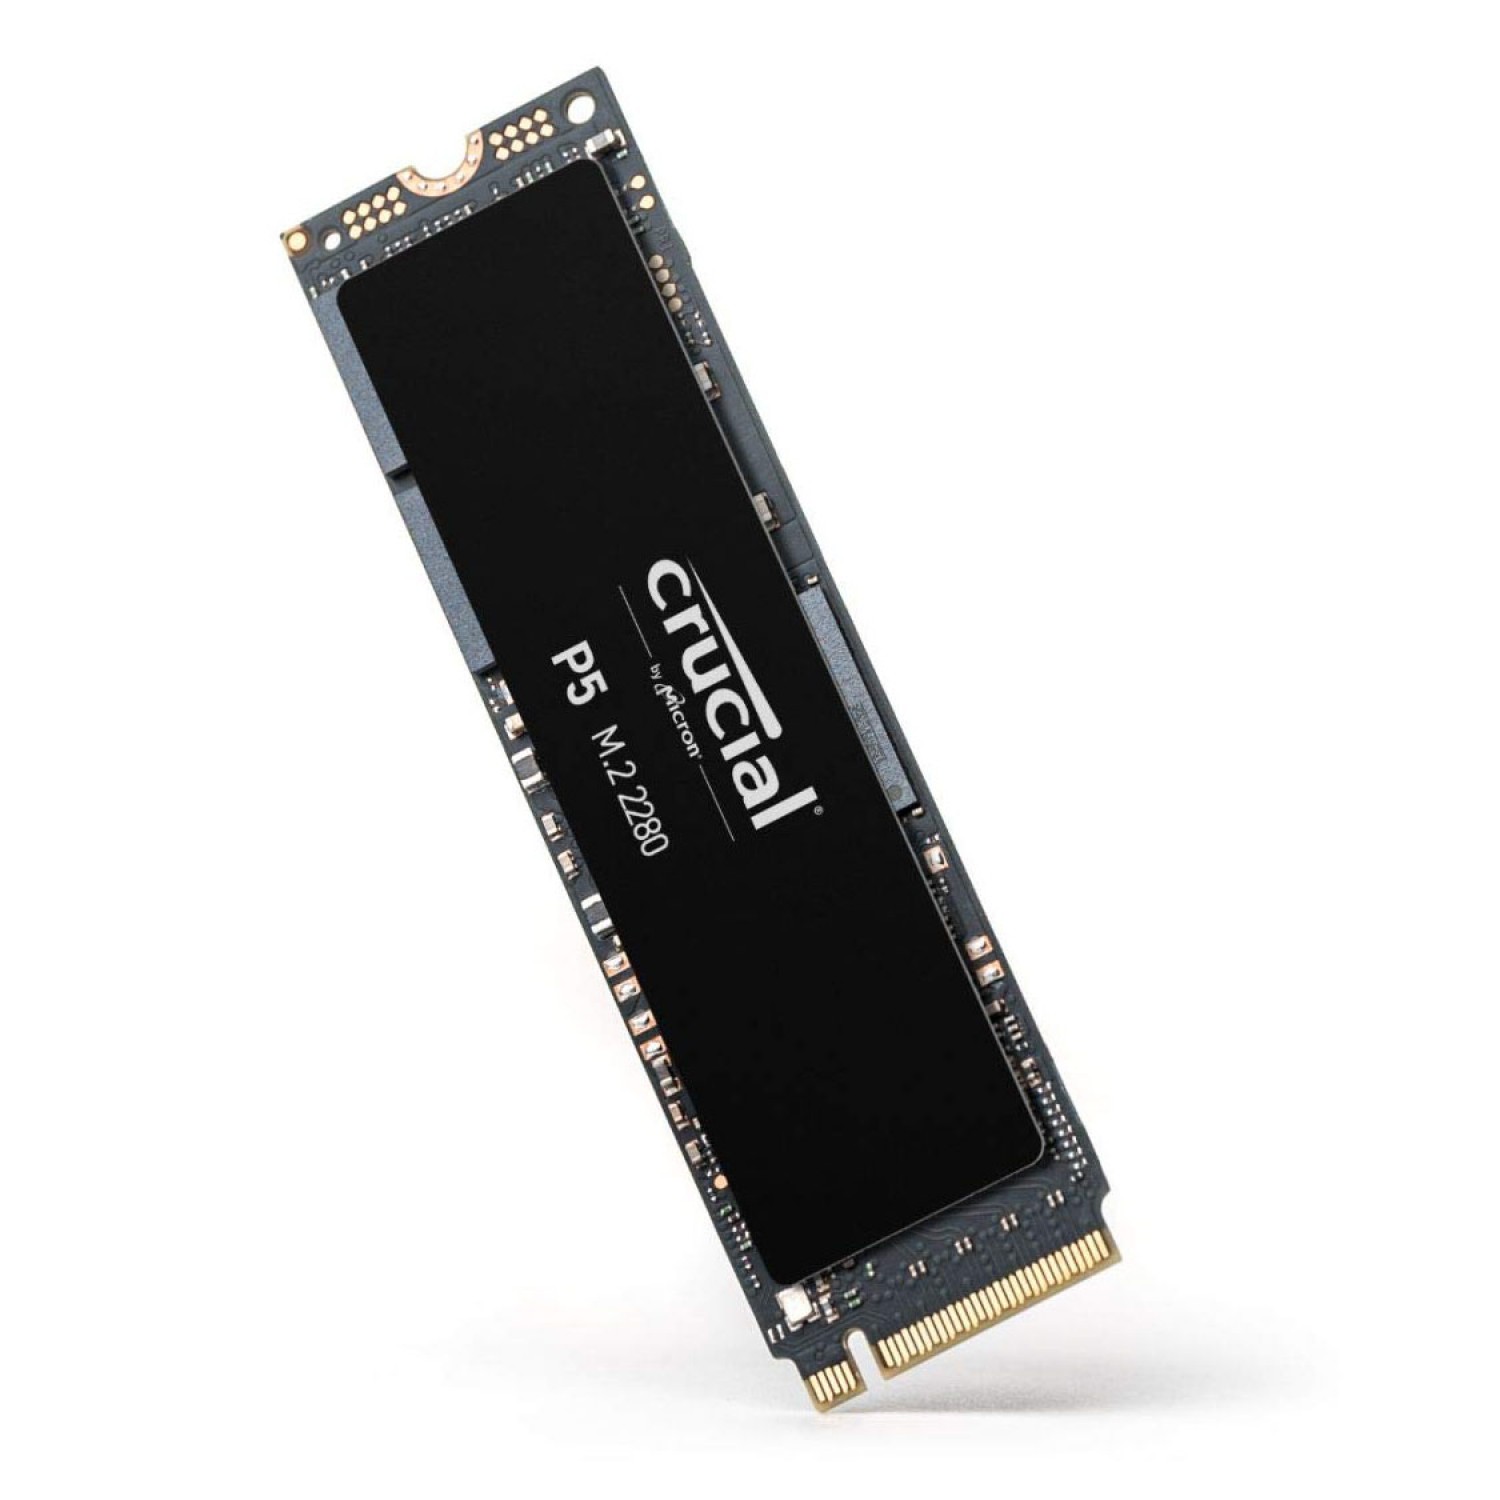 حافظه اس اس دی Crucial P5 250GB-2